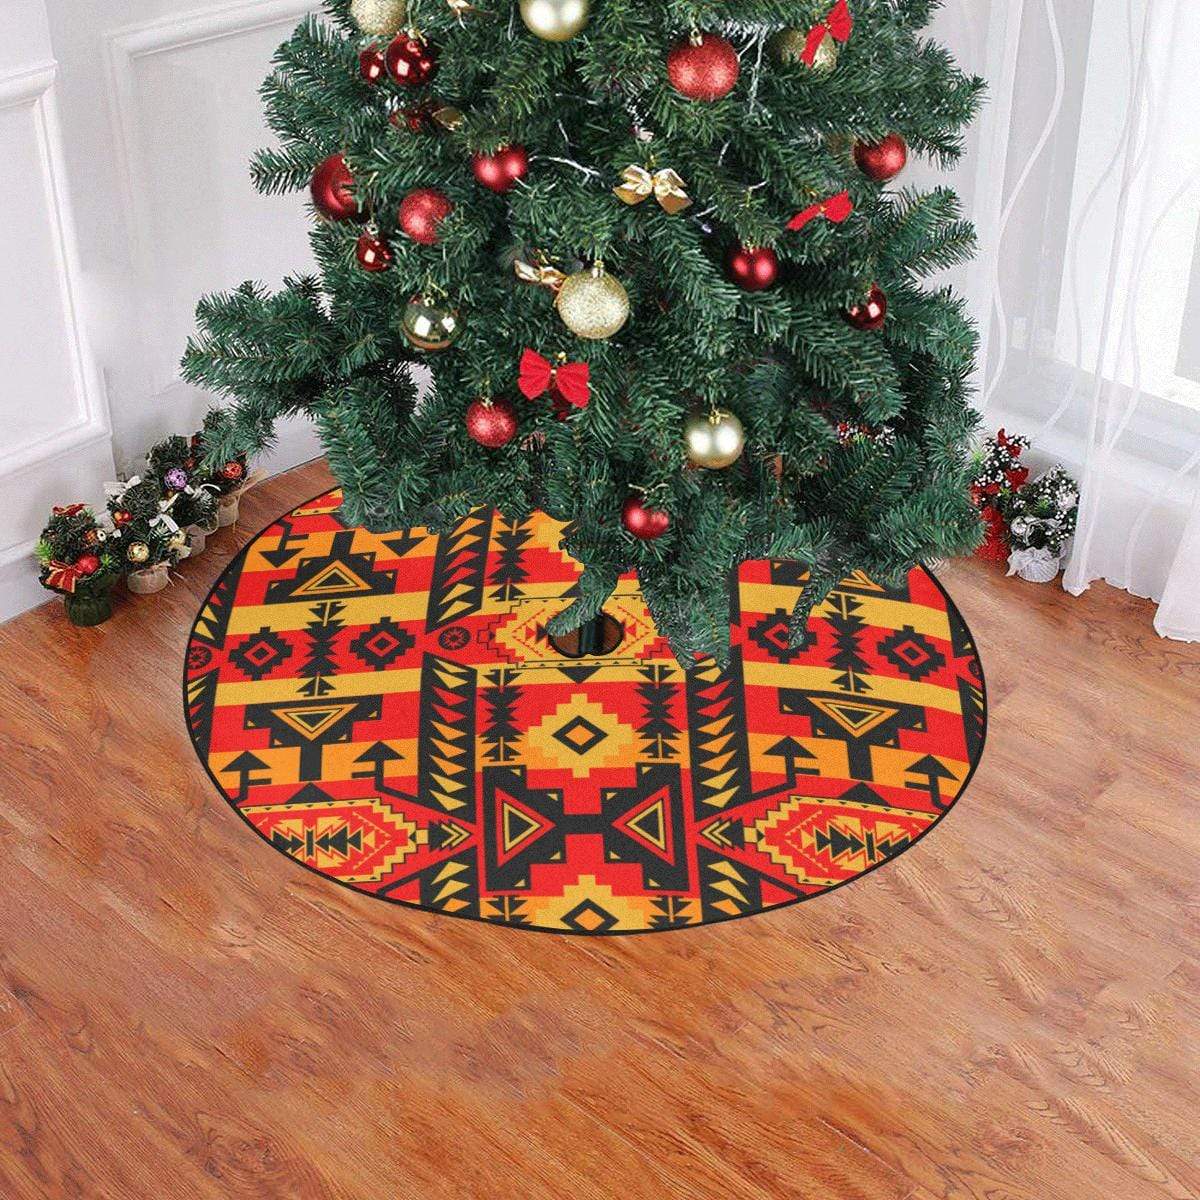 Chiefs Mountain Fire Christmas Tree Skirt 47" x 47" Christmas Tree Skirt e-joyer 